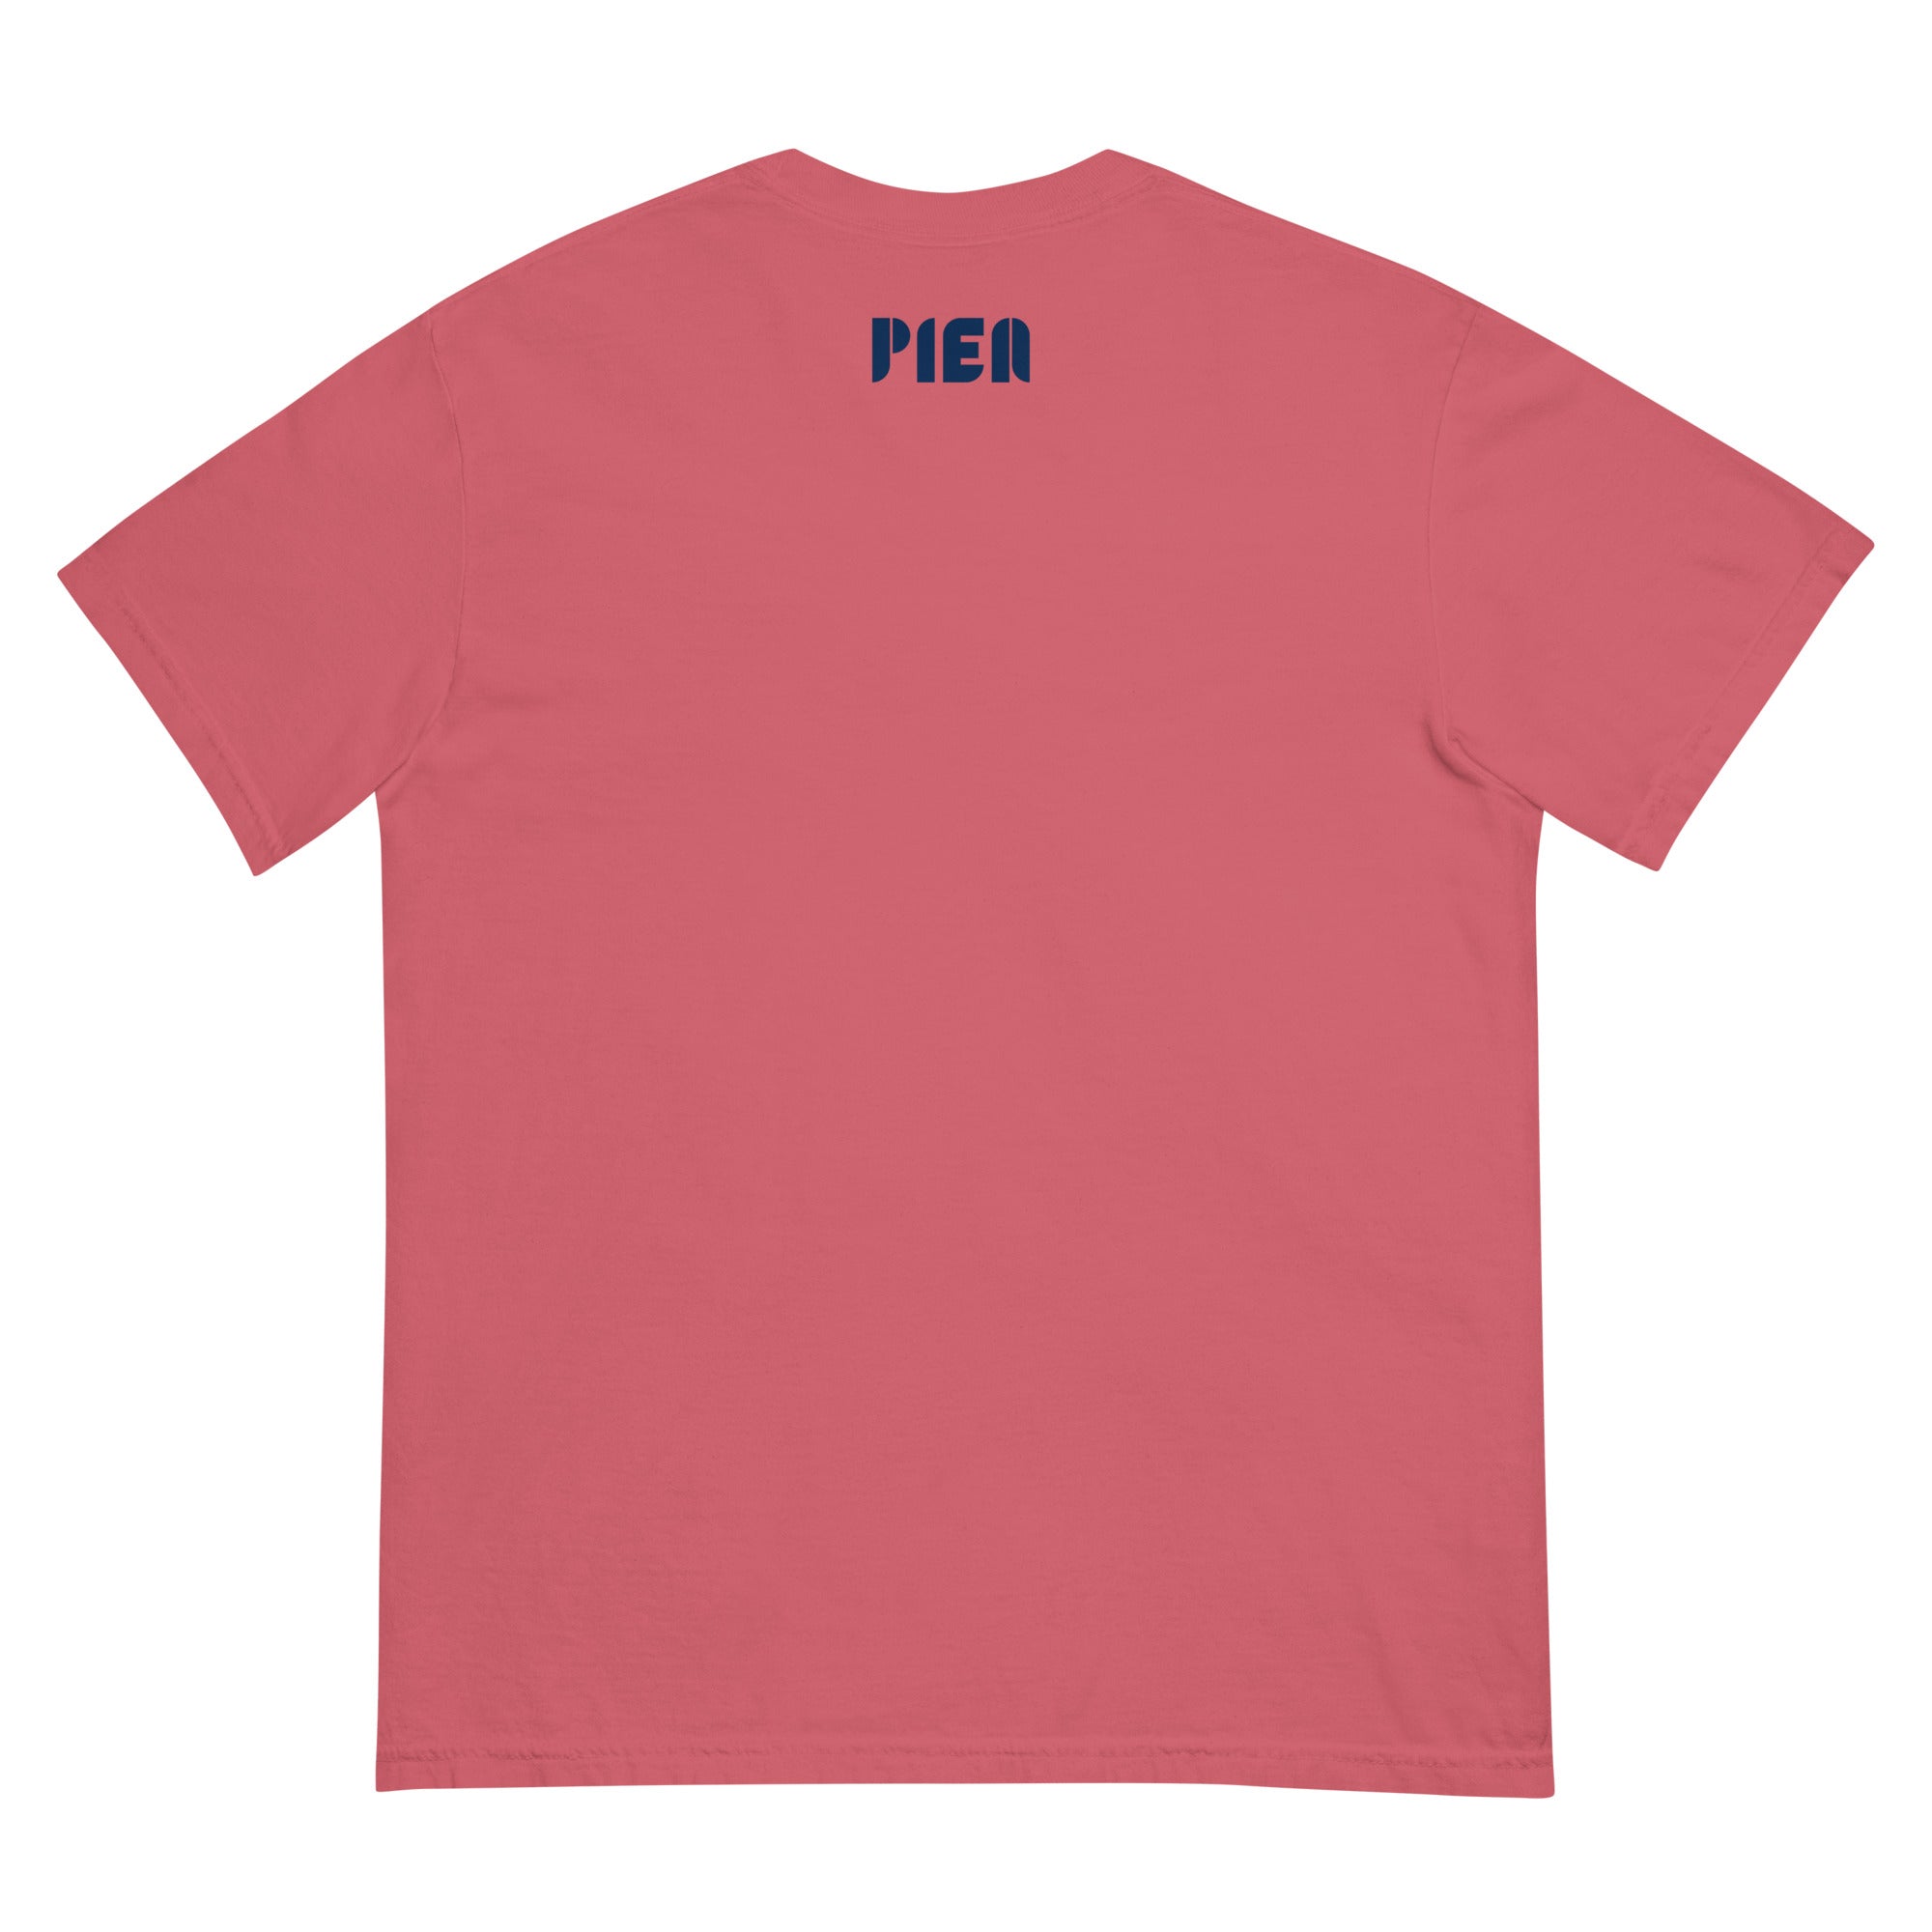 PIEA Shirt - Blue Logo